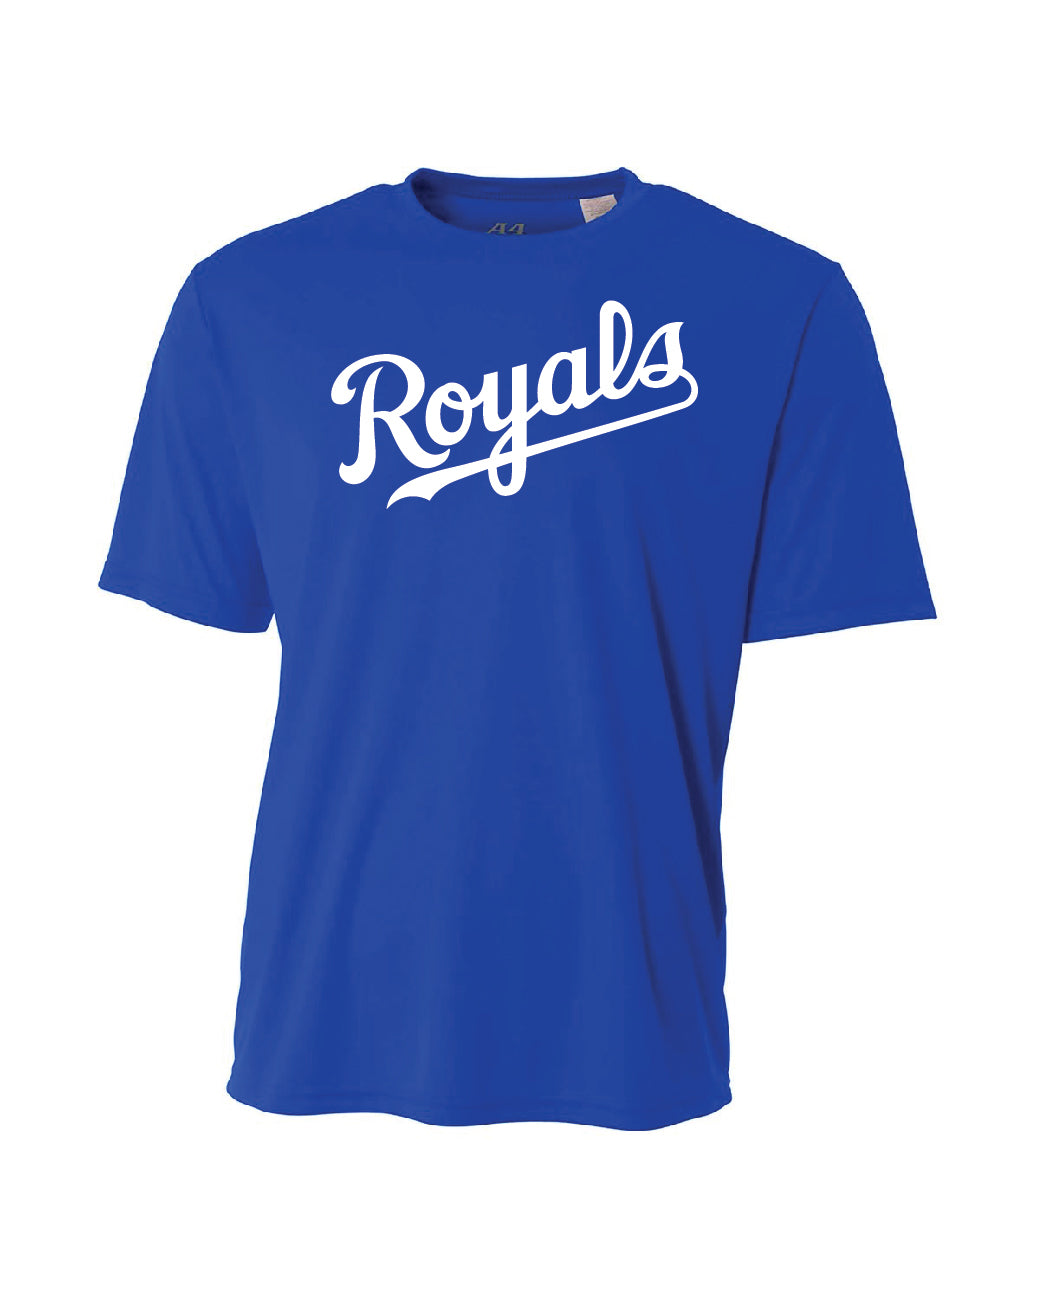 Royals Baseball Drifit Fit T-Shirt